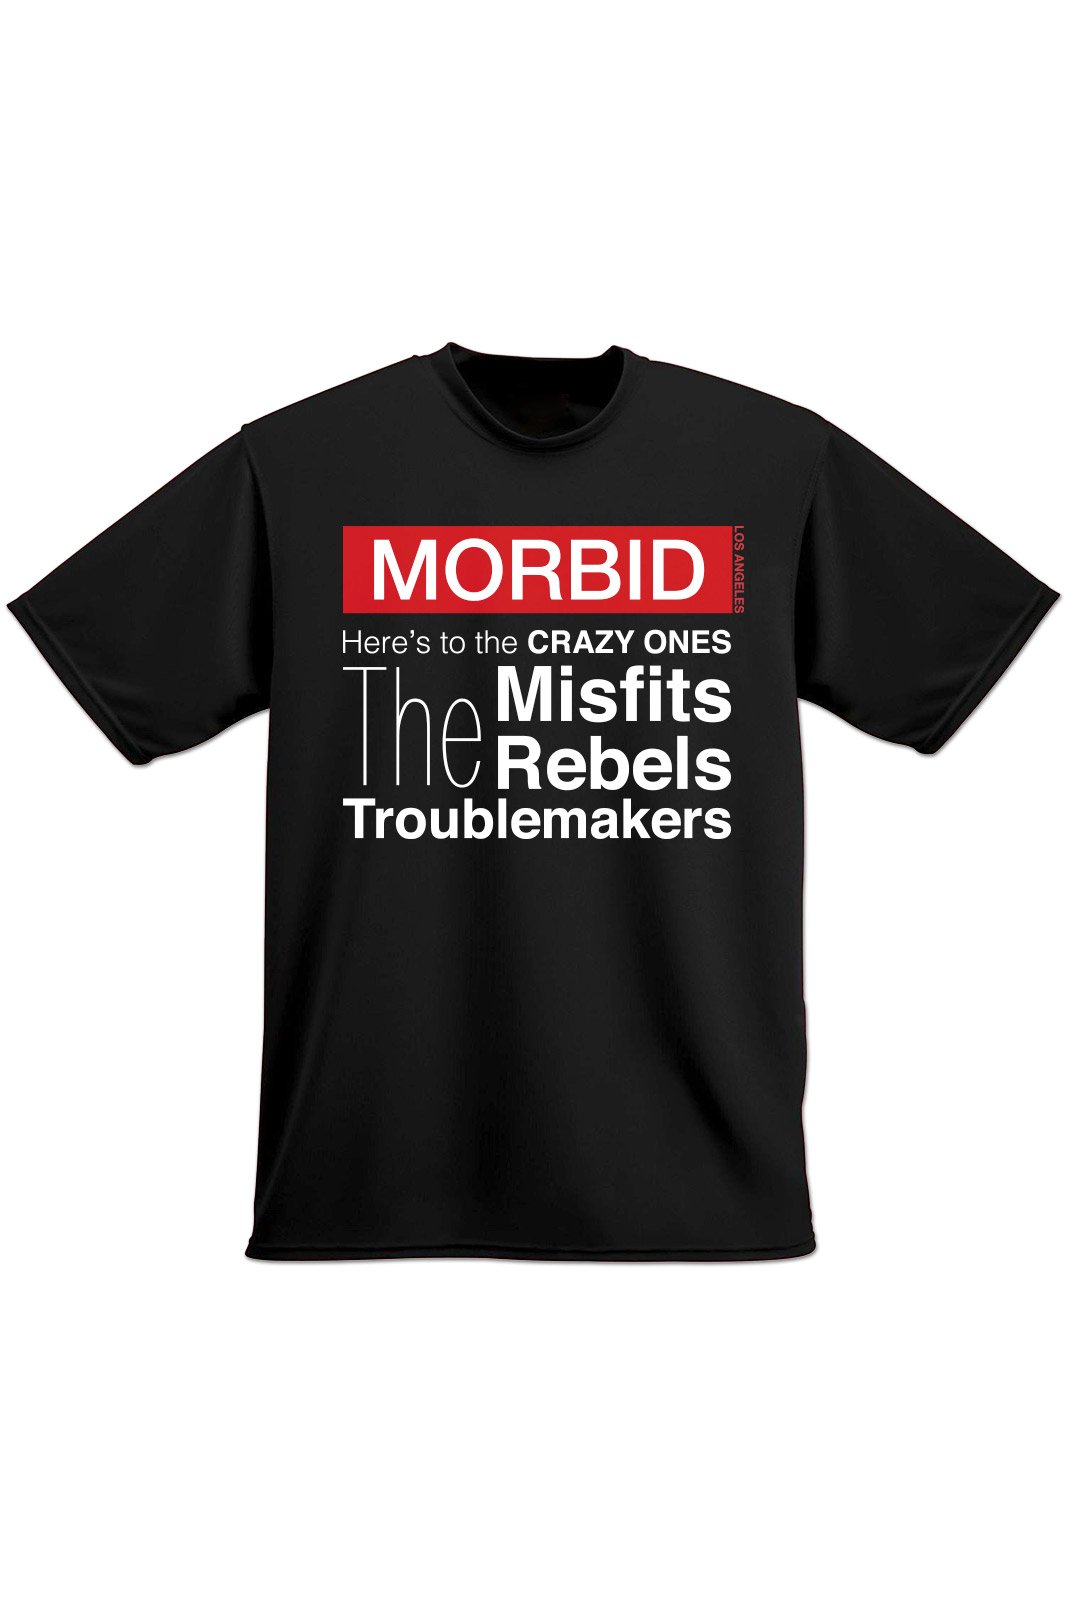 MORBID LA Clothing Streetwear Misfits Rebels Black t-shirt